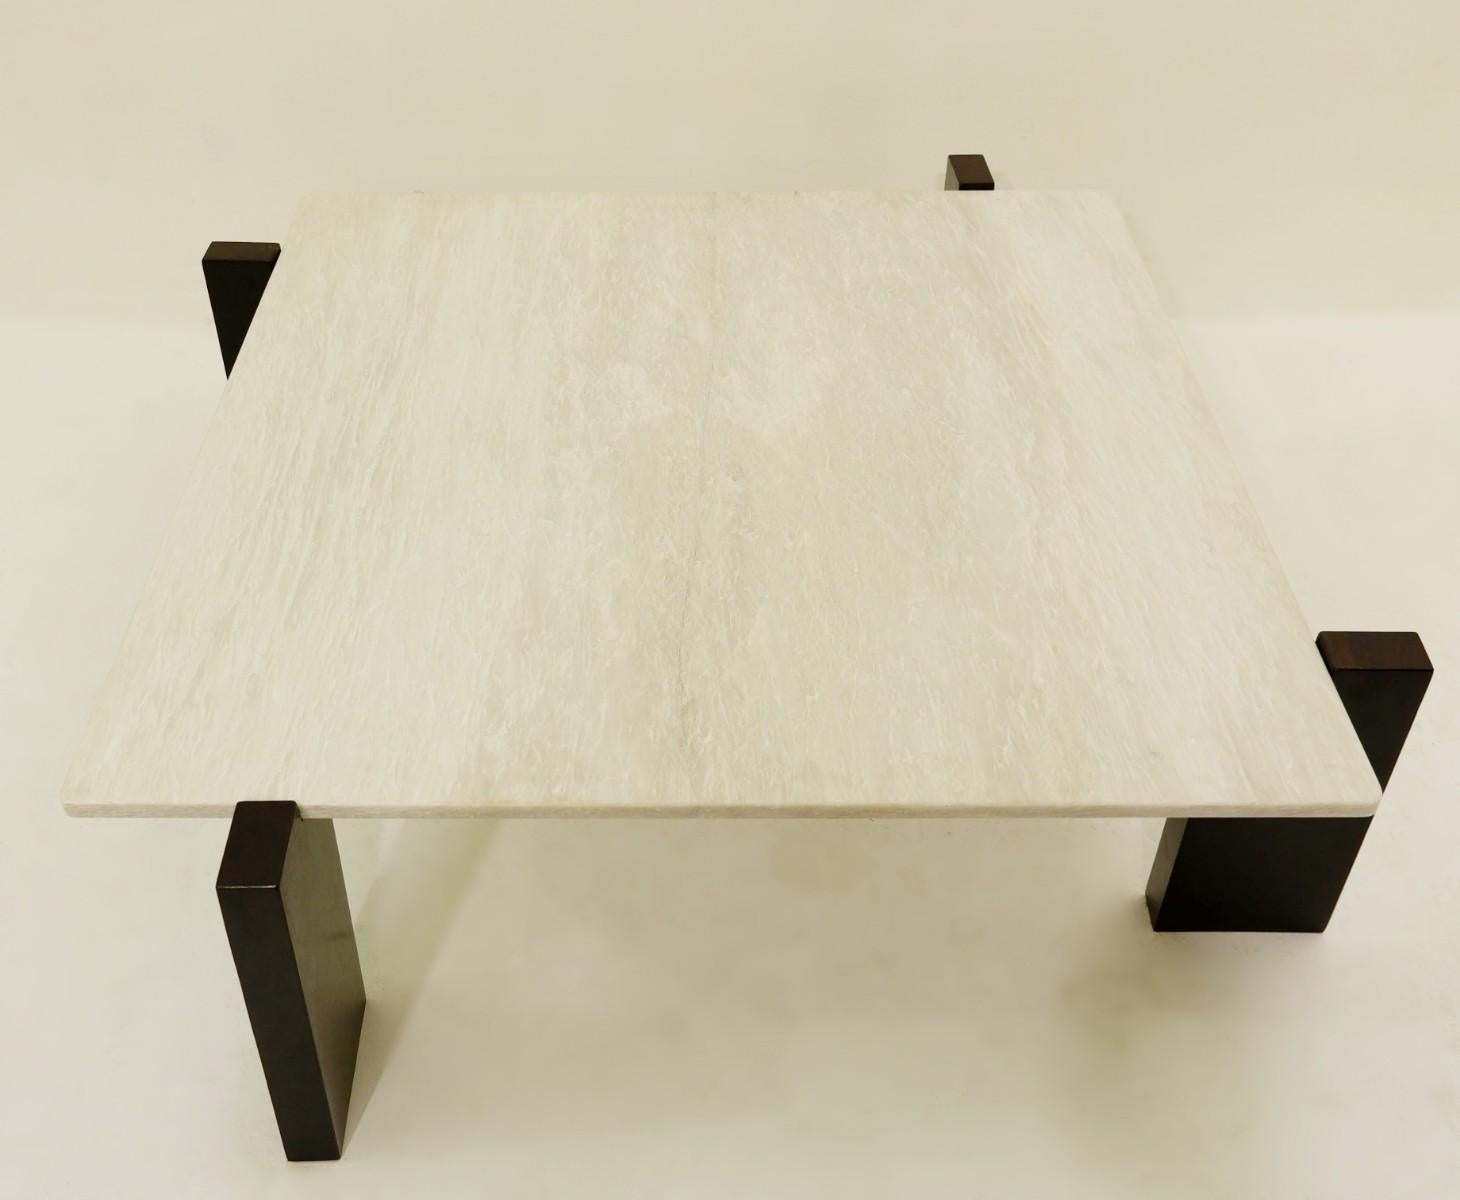 Coffee table by Oscar Niemeyer for Tepperman Brasile, 1970s - Aegean marble top and ebonized wood legs.